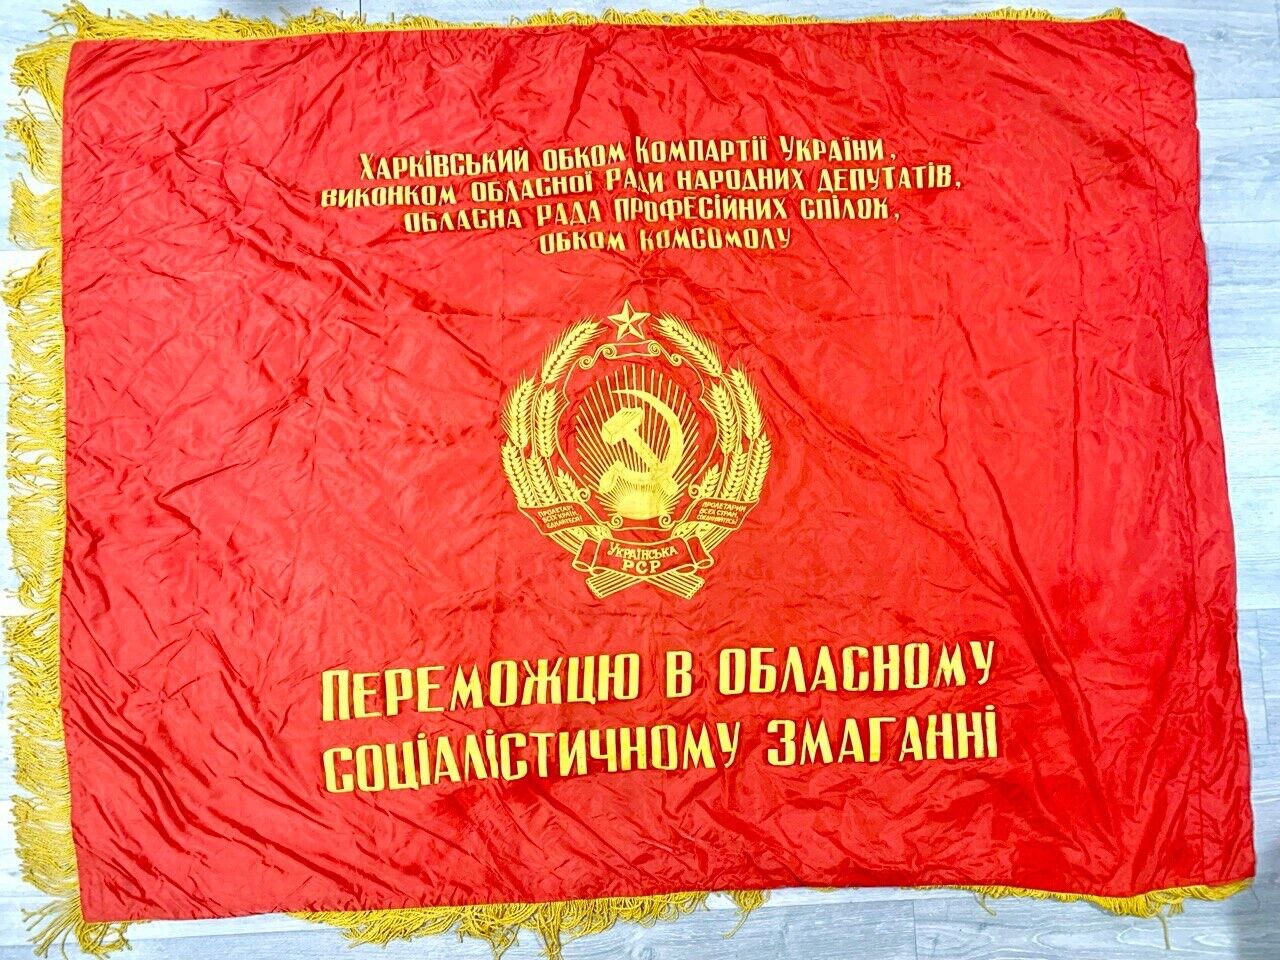 USSR. Vintage Soviet Flag. Banner Propaganda. Socialist competition. Lenin.